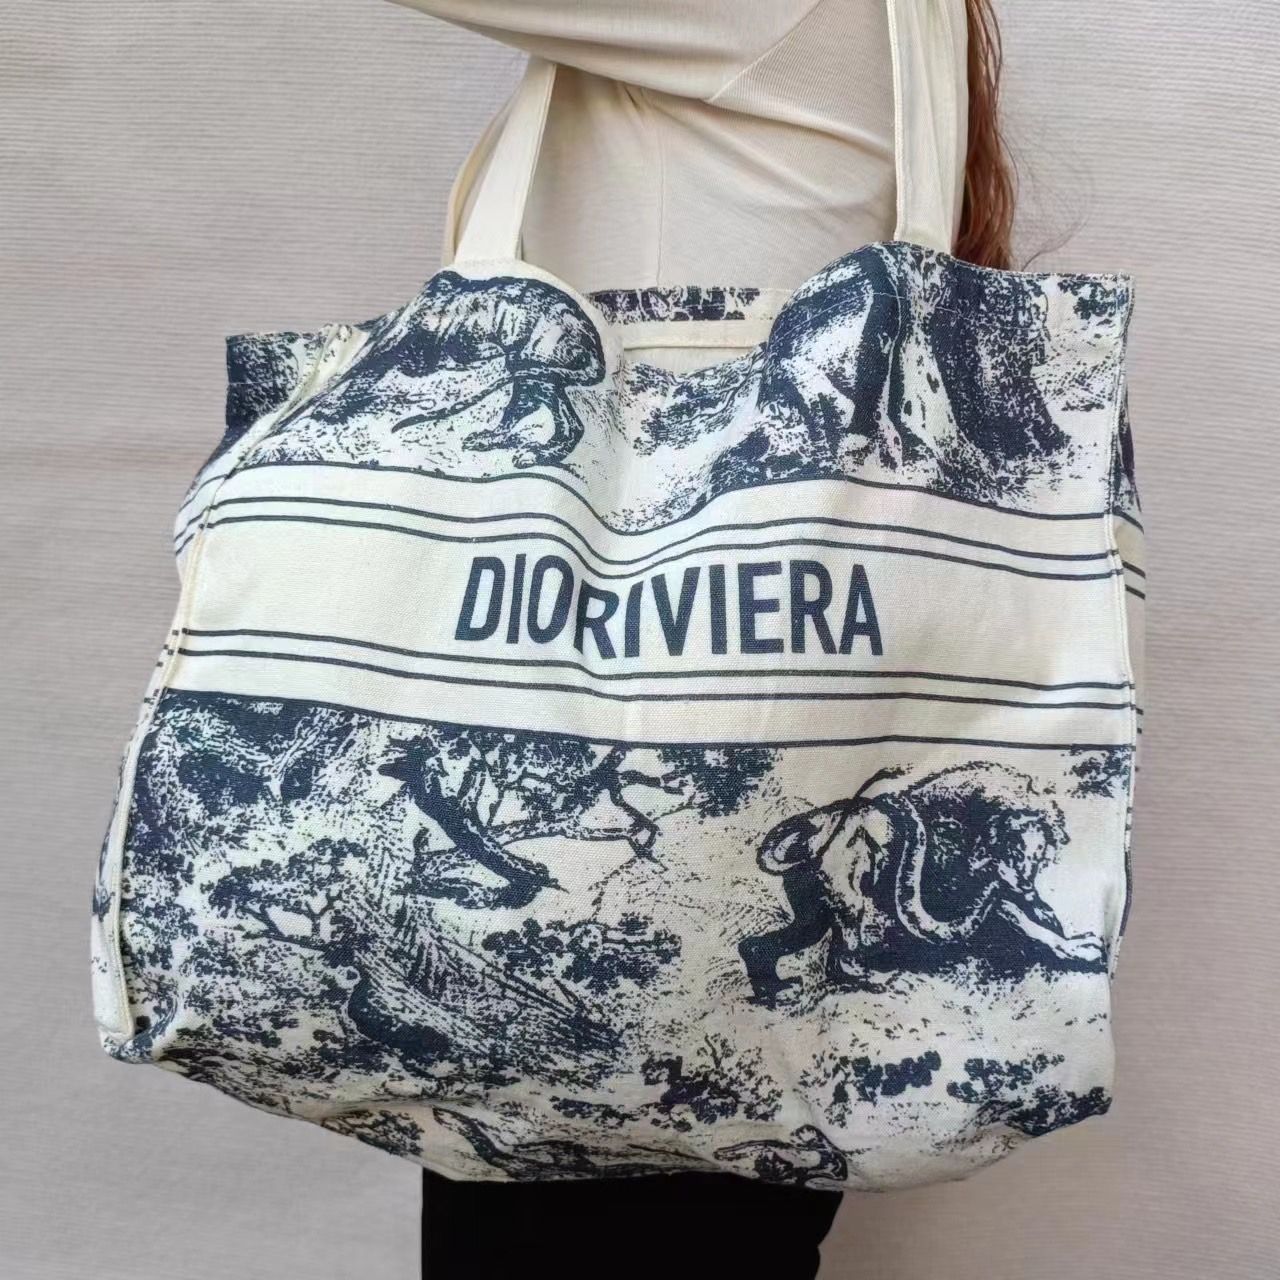 Dior Dioriviera 限定ノベルティバッグ ブックトート - トートバッグ